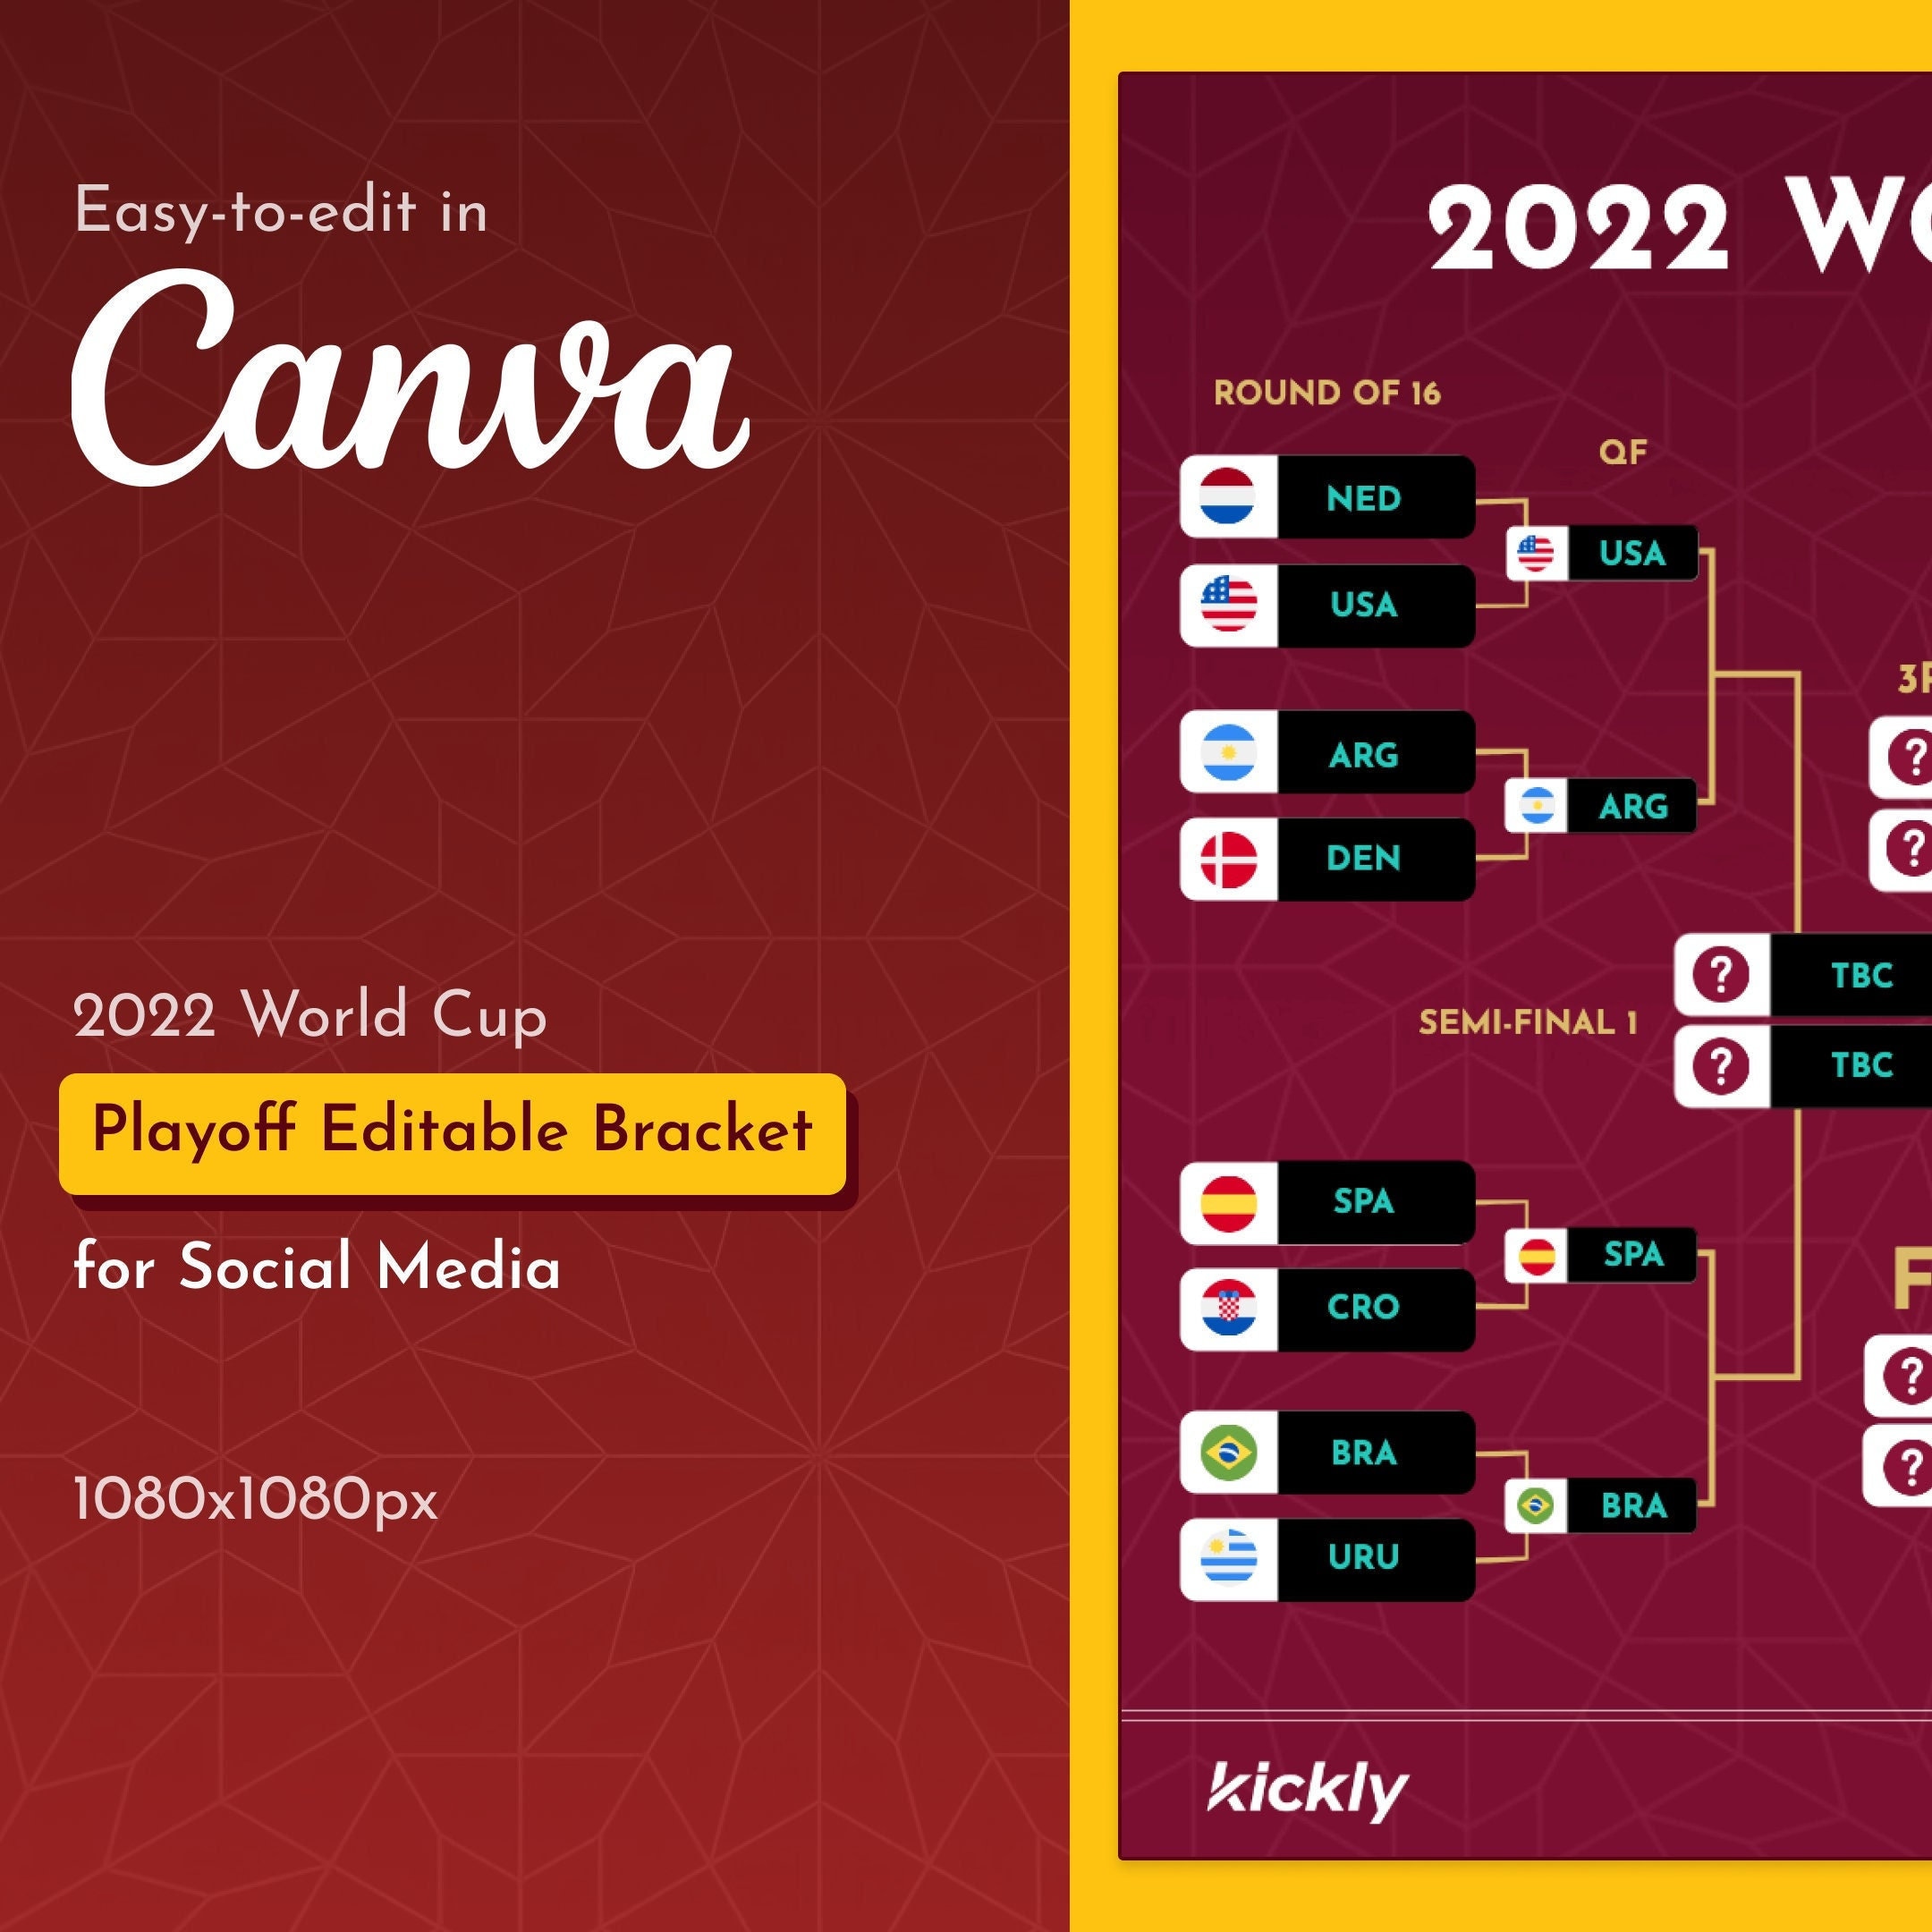 FIFA Qatar World Cup 2022 Playoff Bracket canva Template